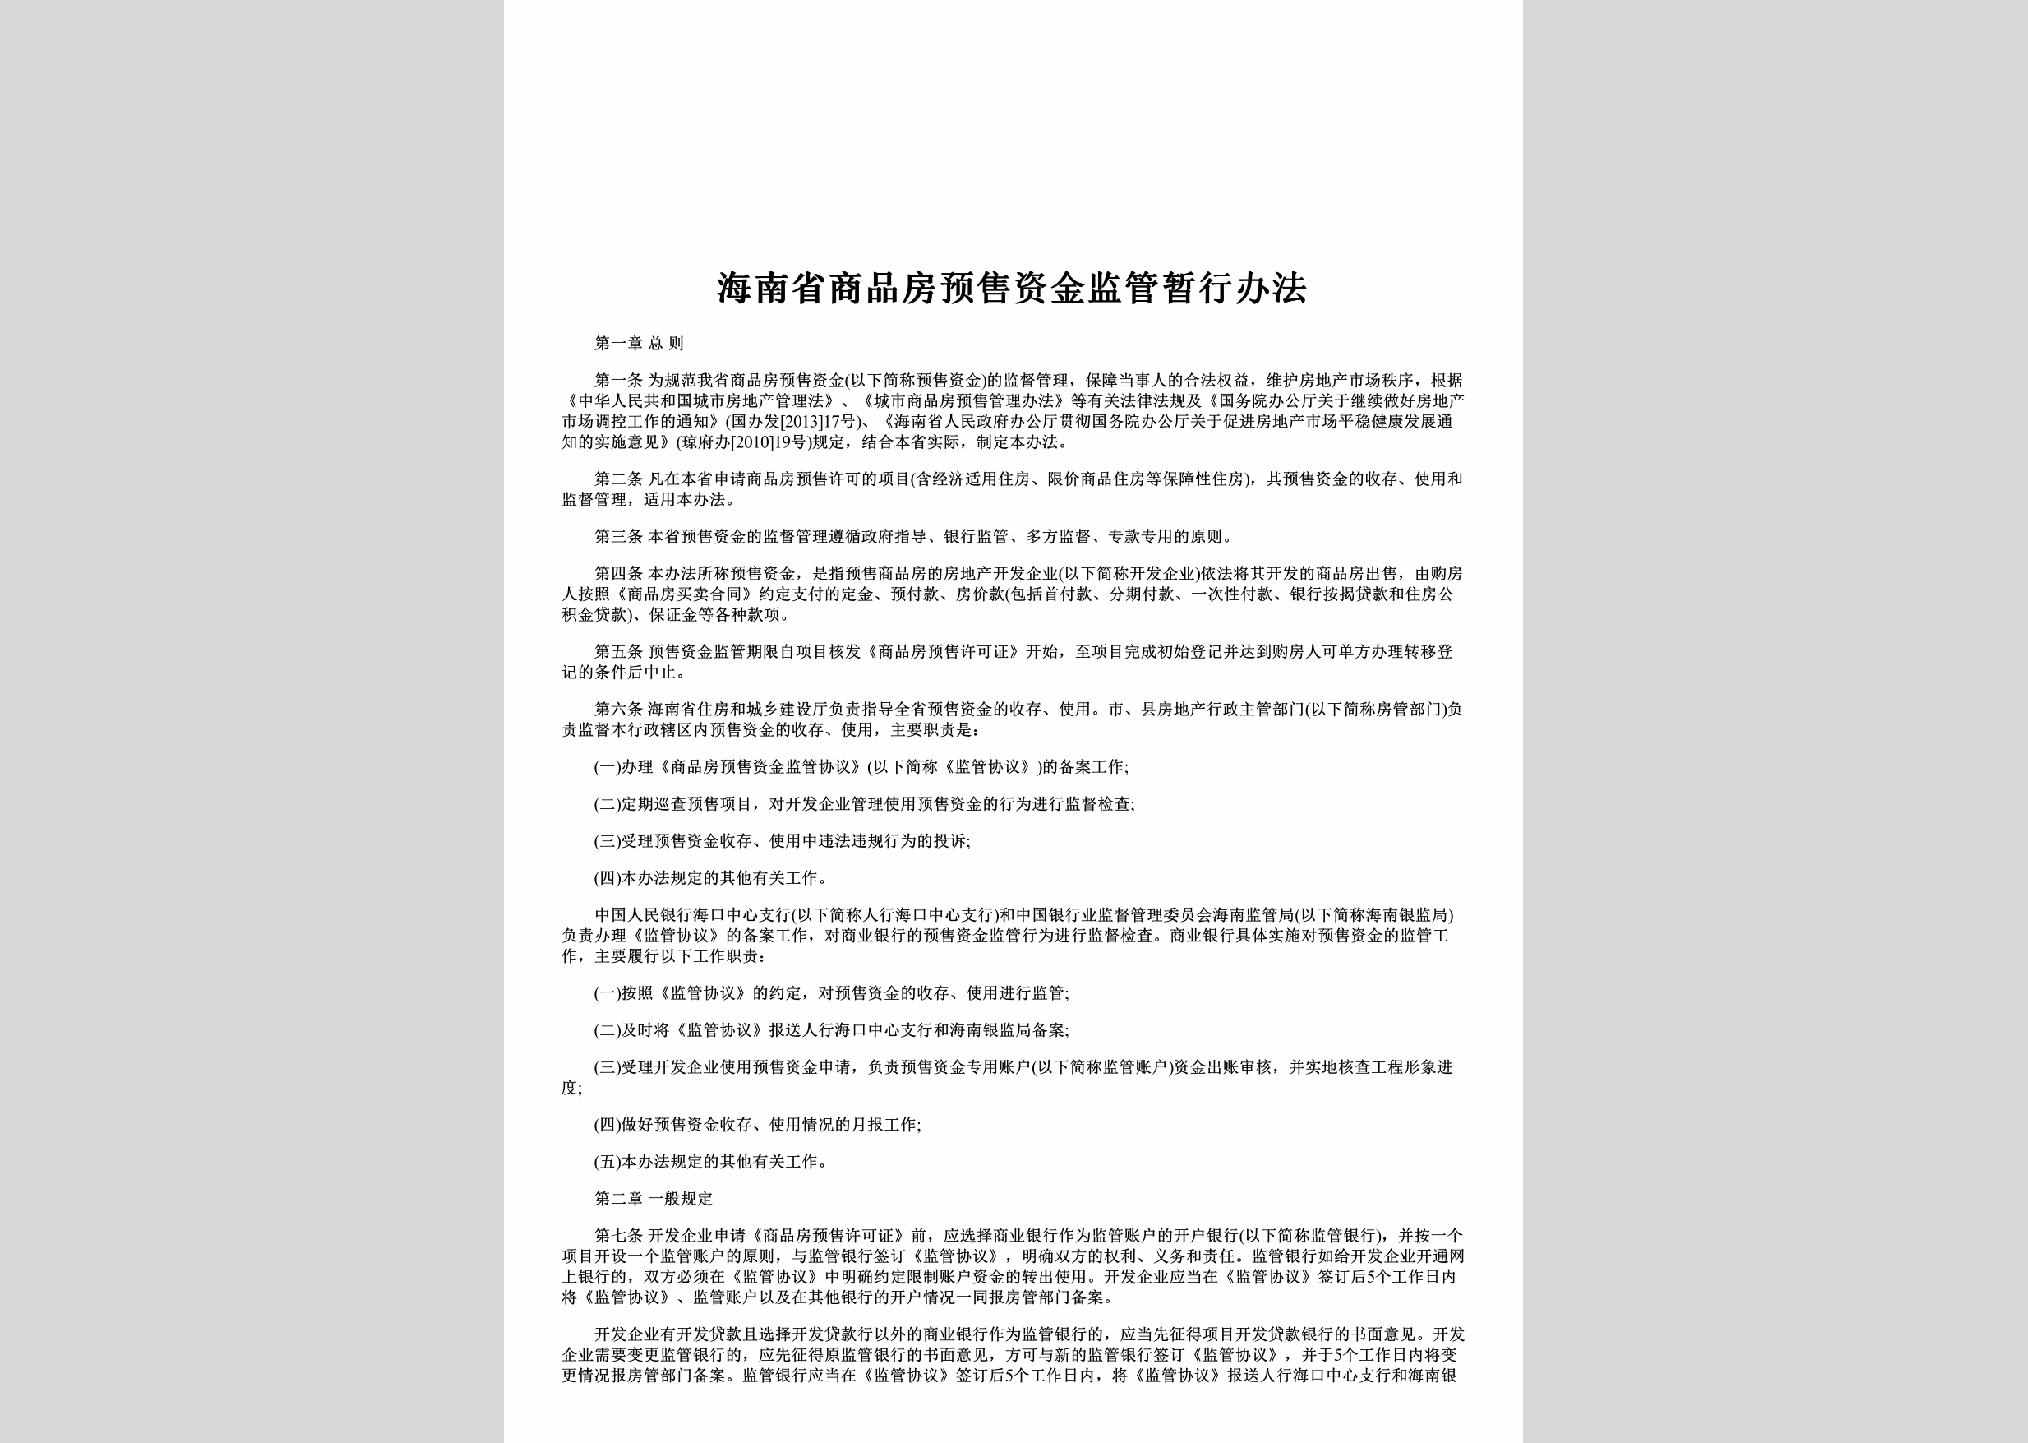 HAN-SPFYSBF-2014：海南省商品房预售资金监管暂行办法